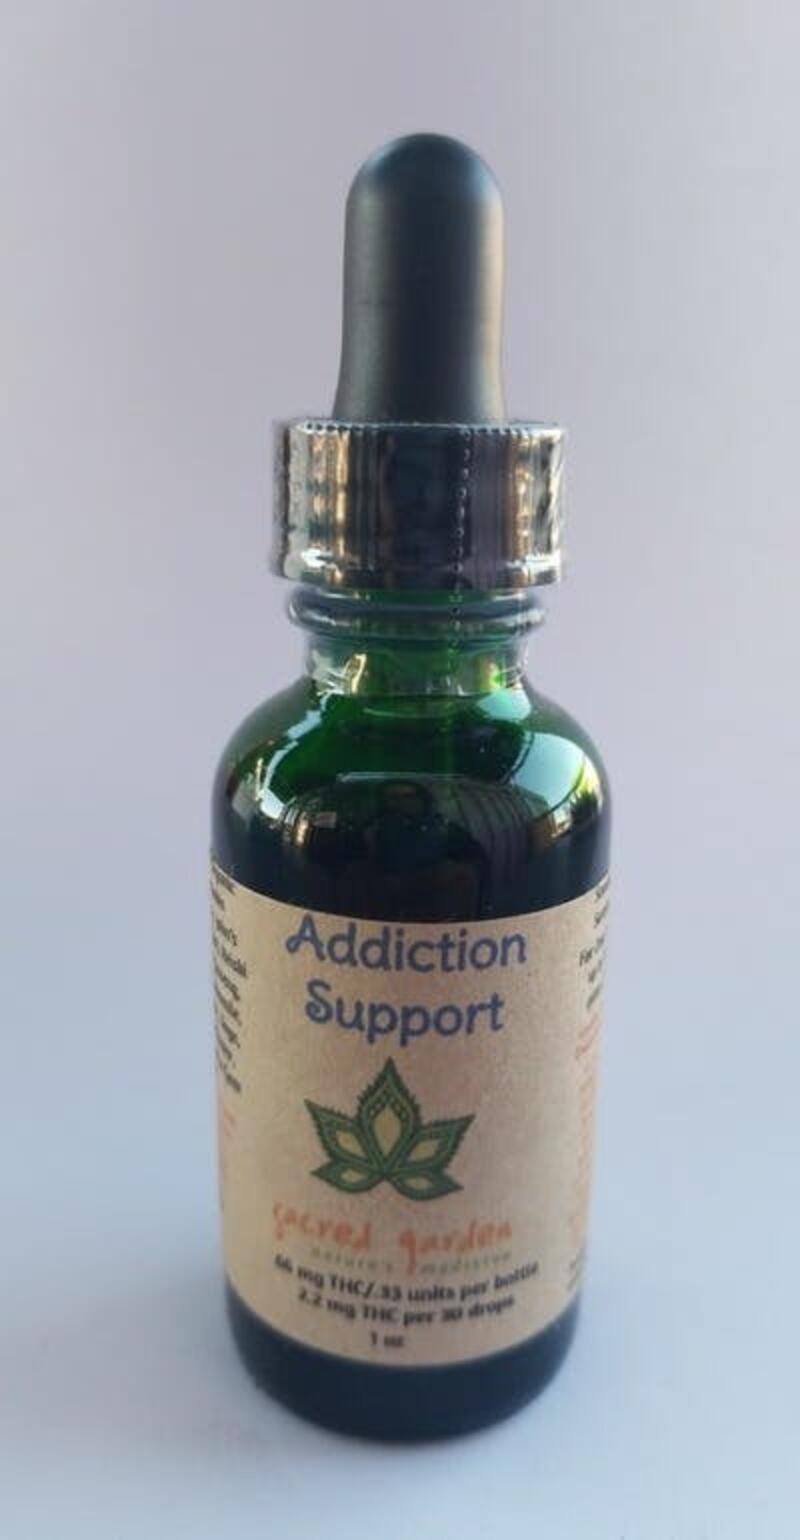 Addiction Support Tincture 1 oz (66 MG)